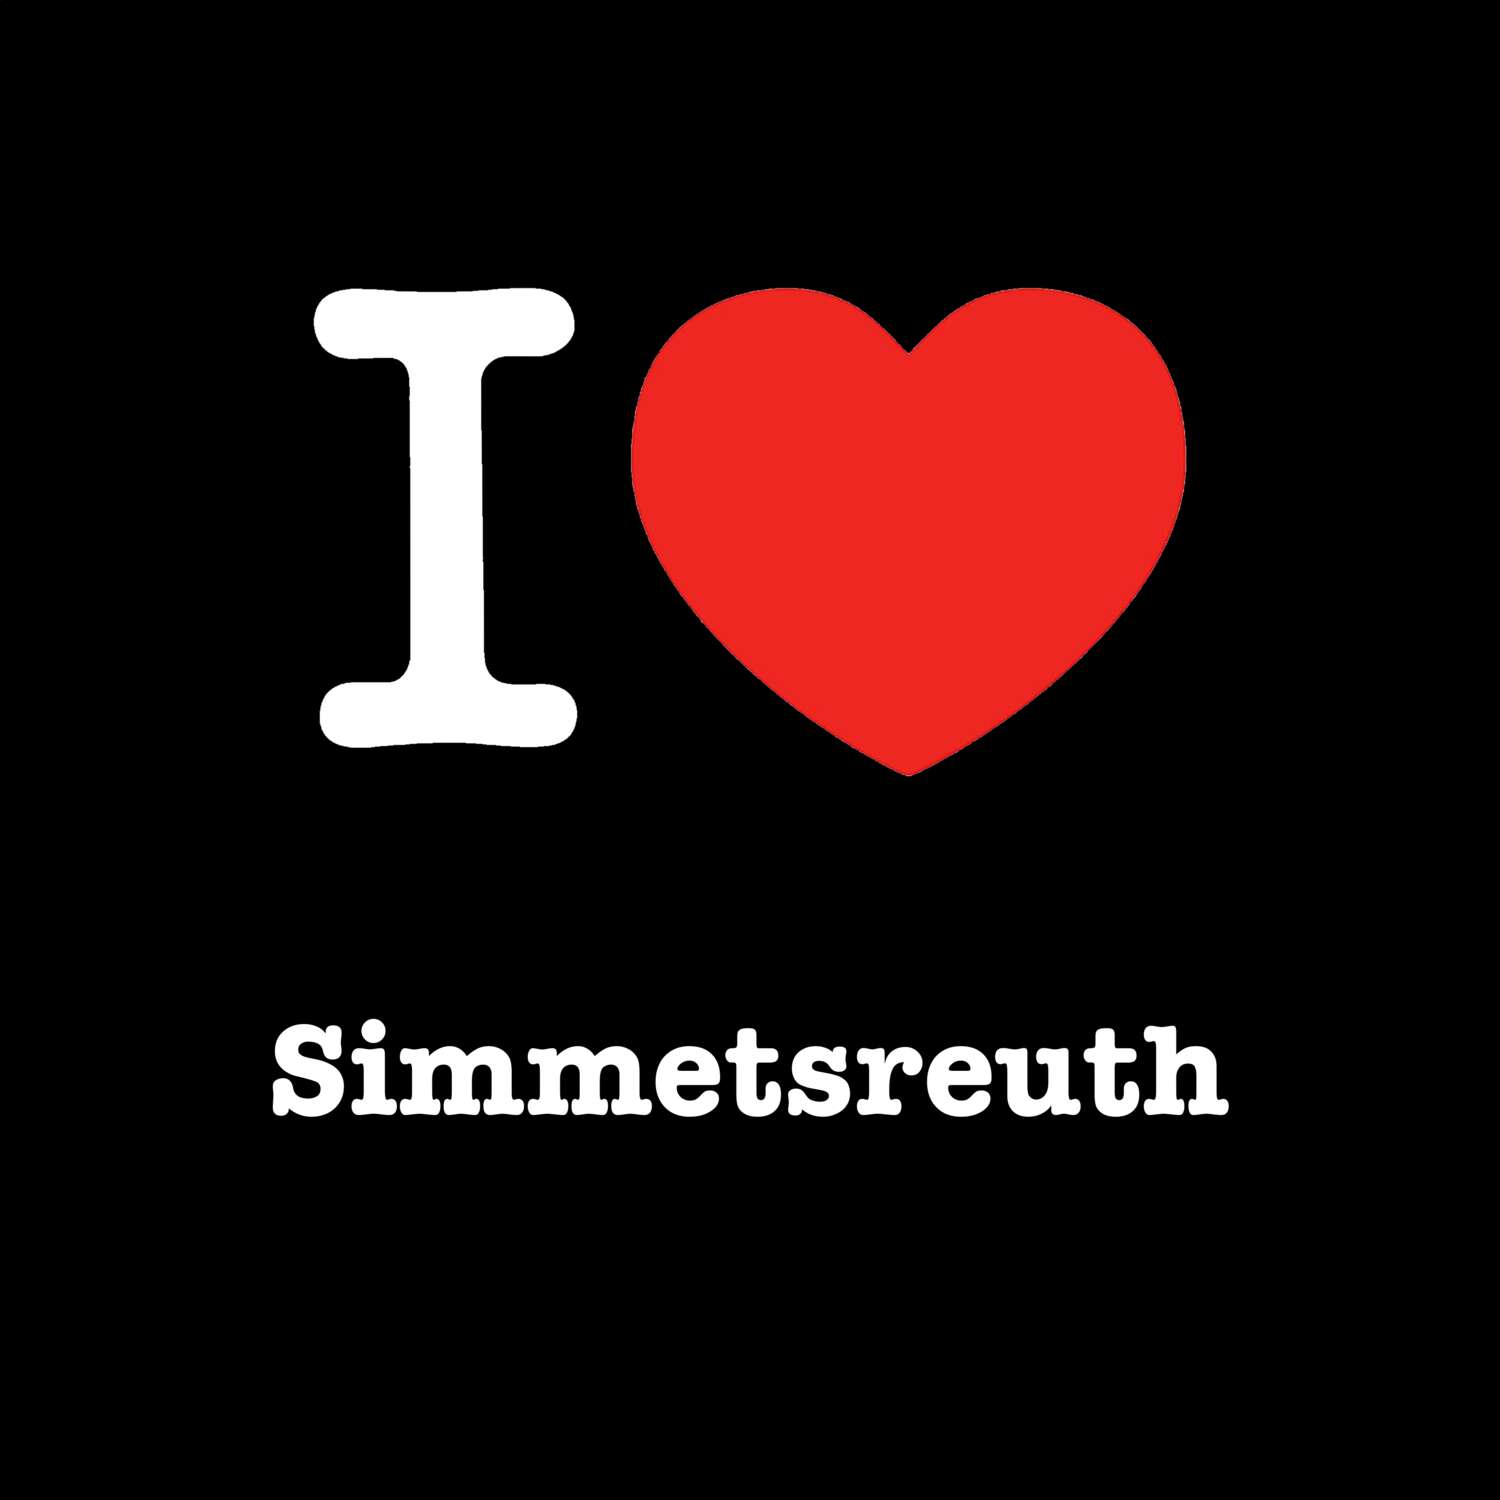 Simmetsreuth T-Shirt »I love«